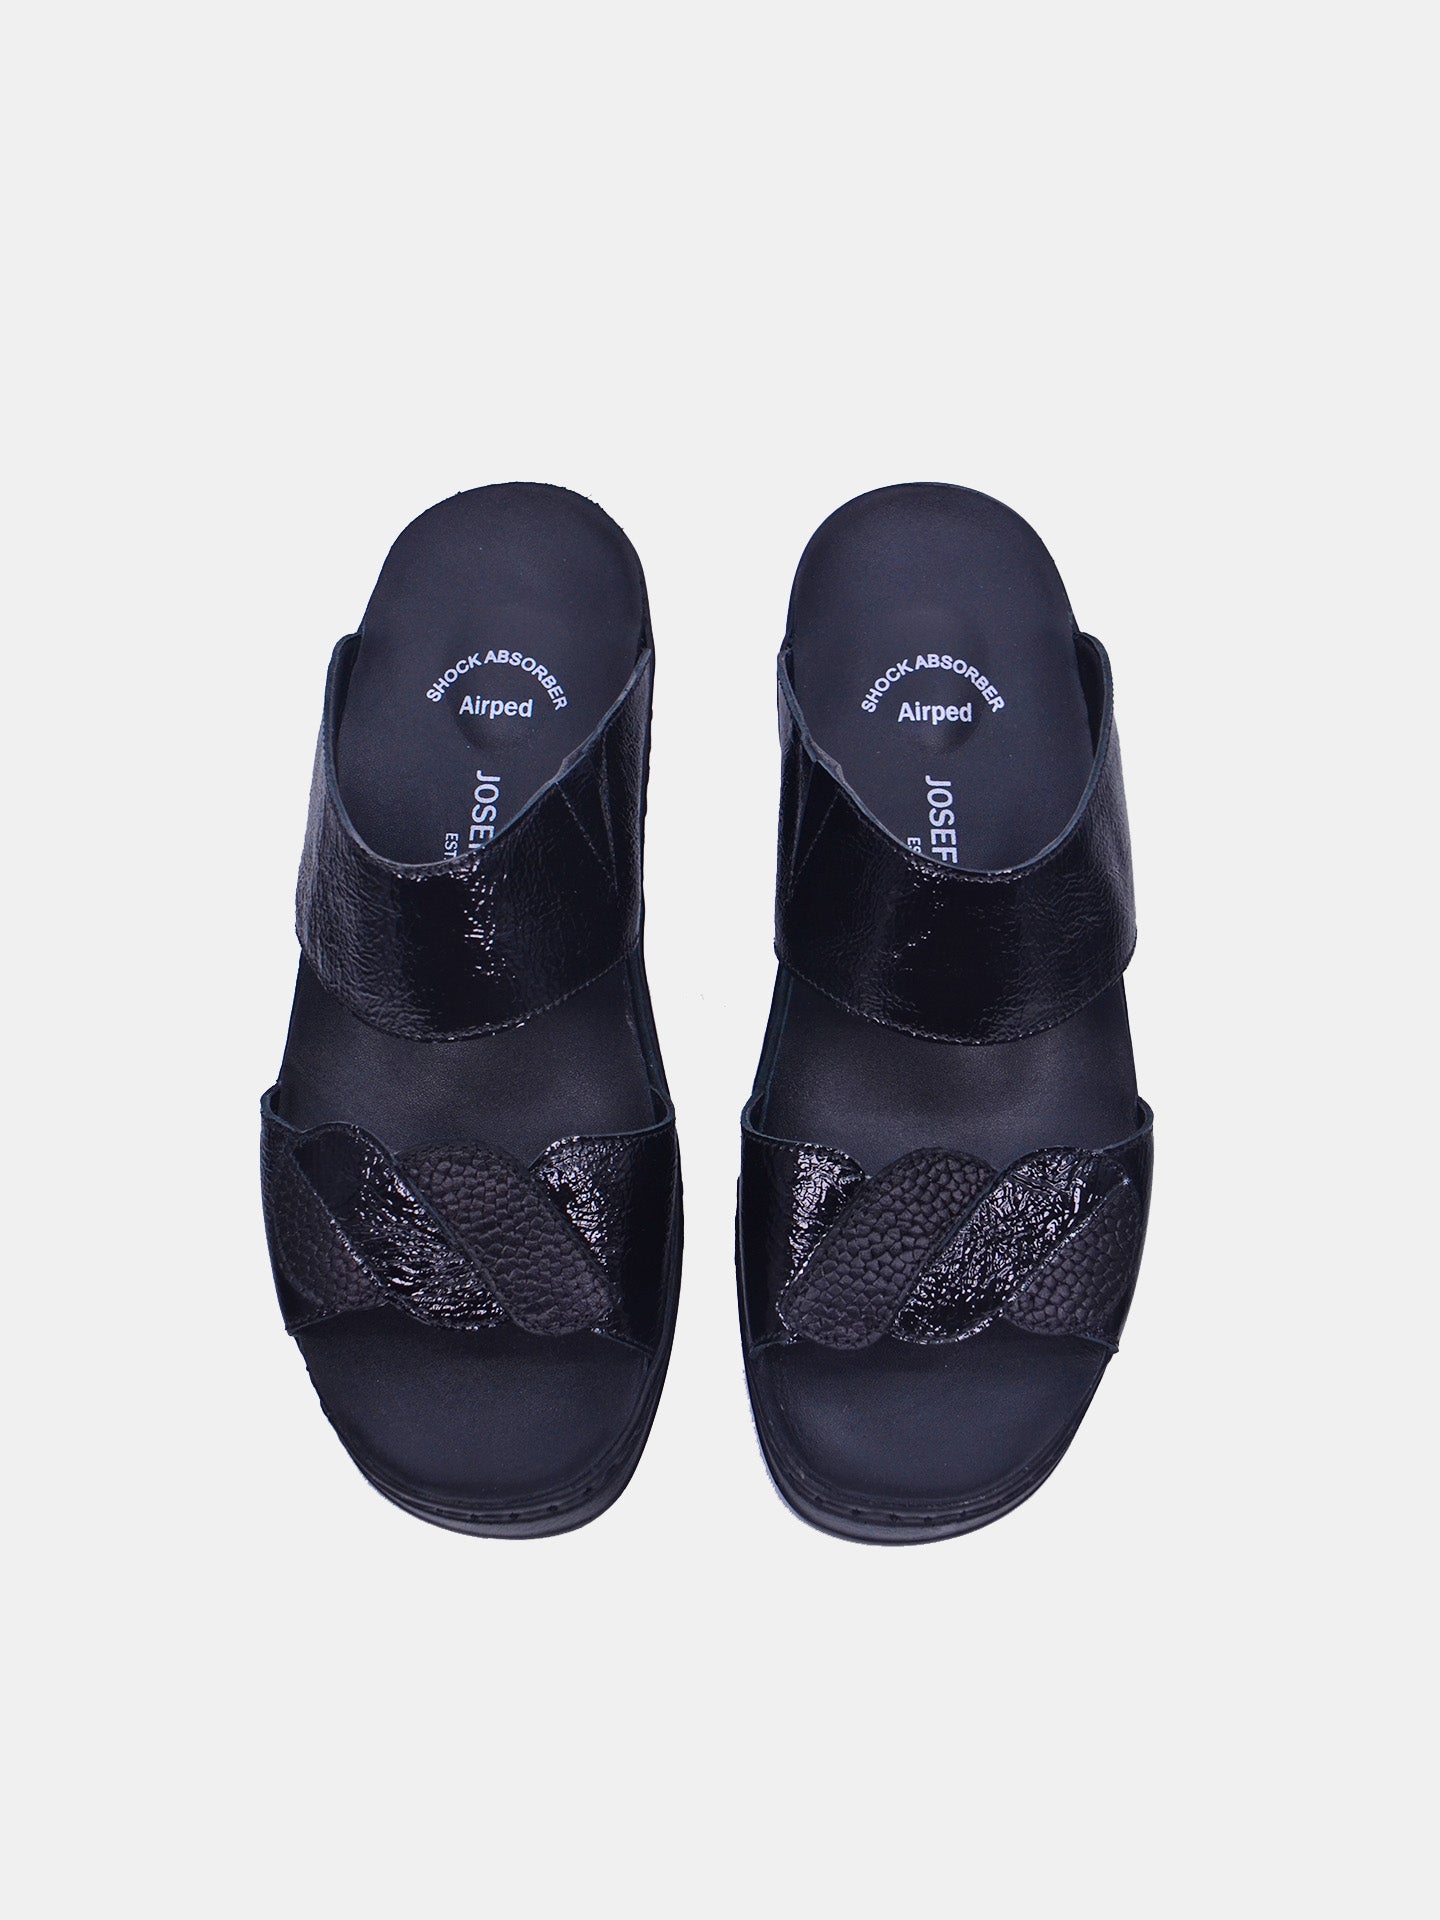 Josef Seibel 08829 Women's Flat Sandals #color_Black